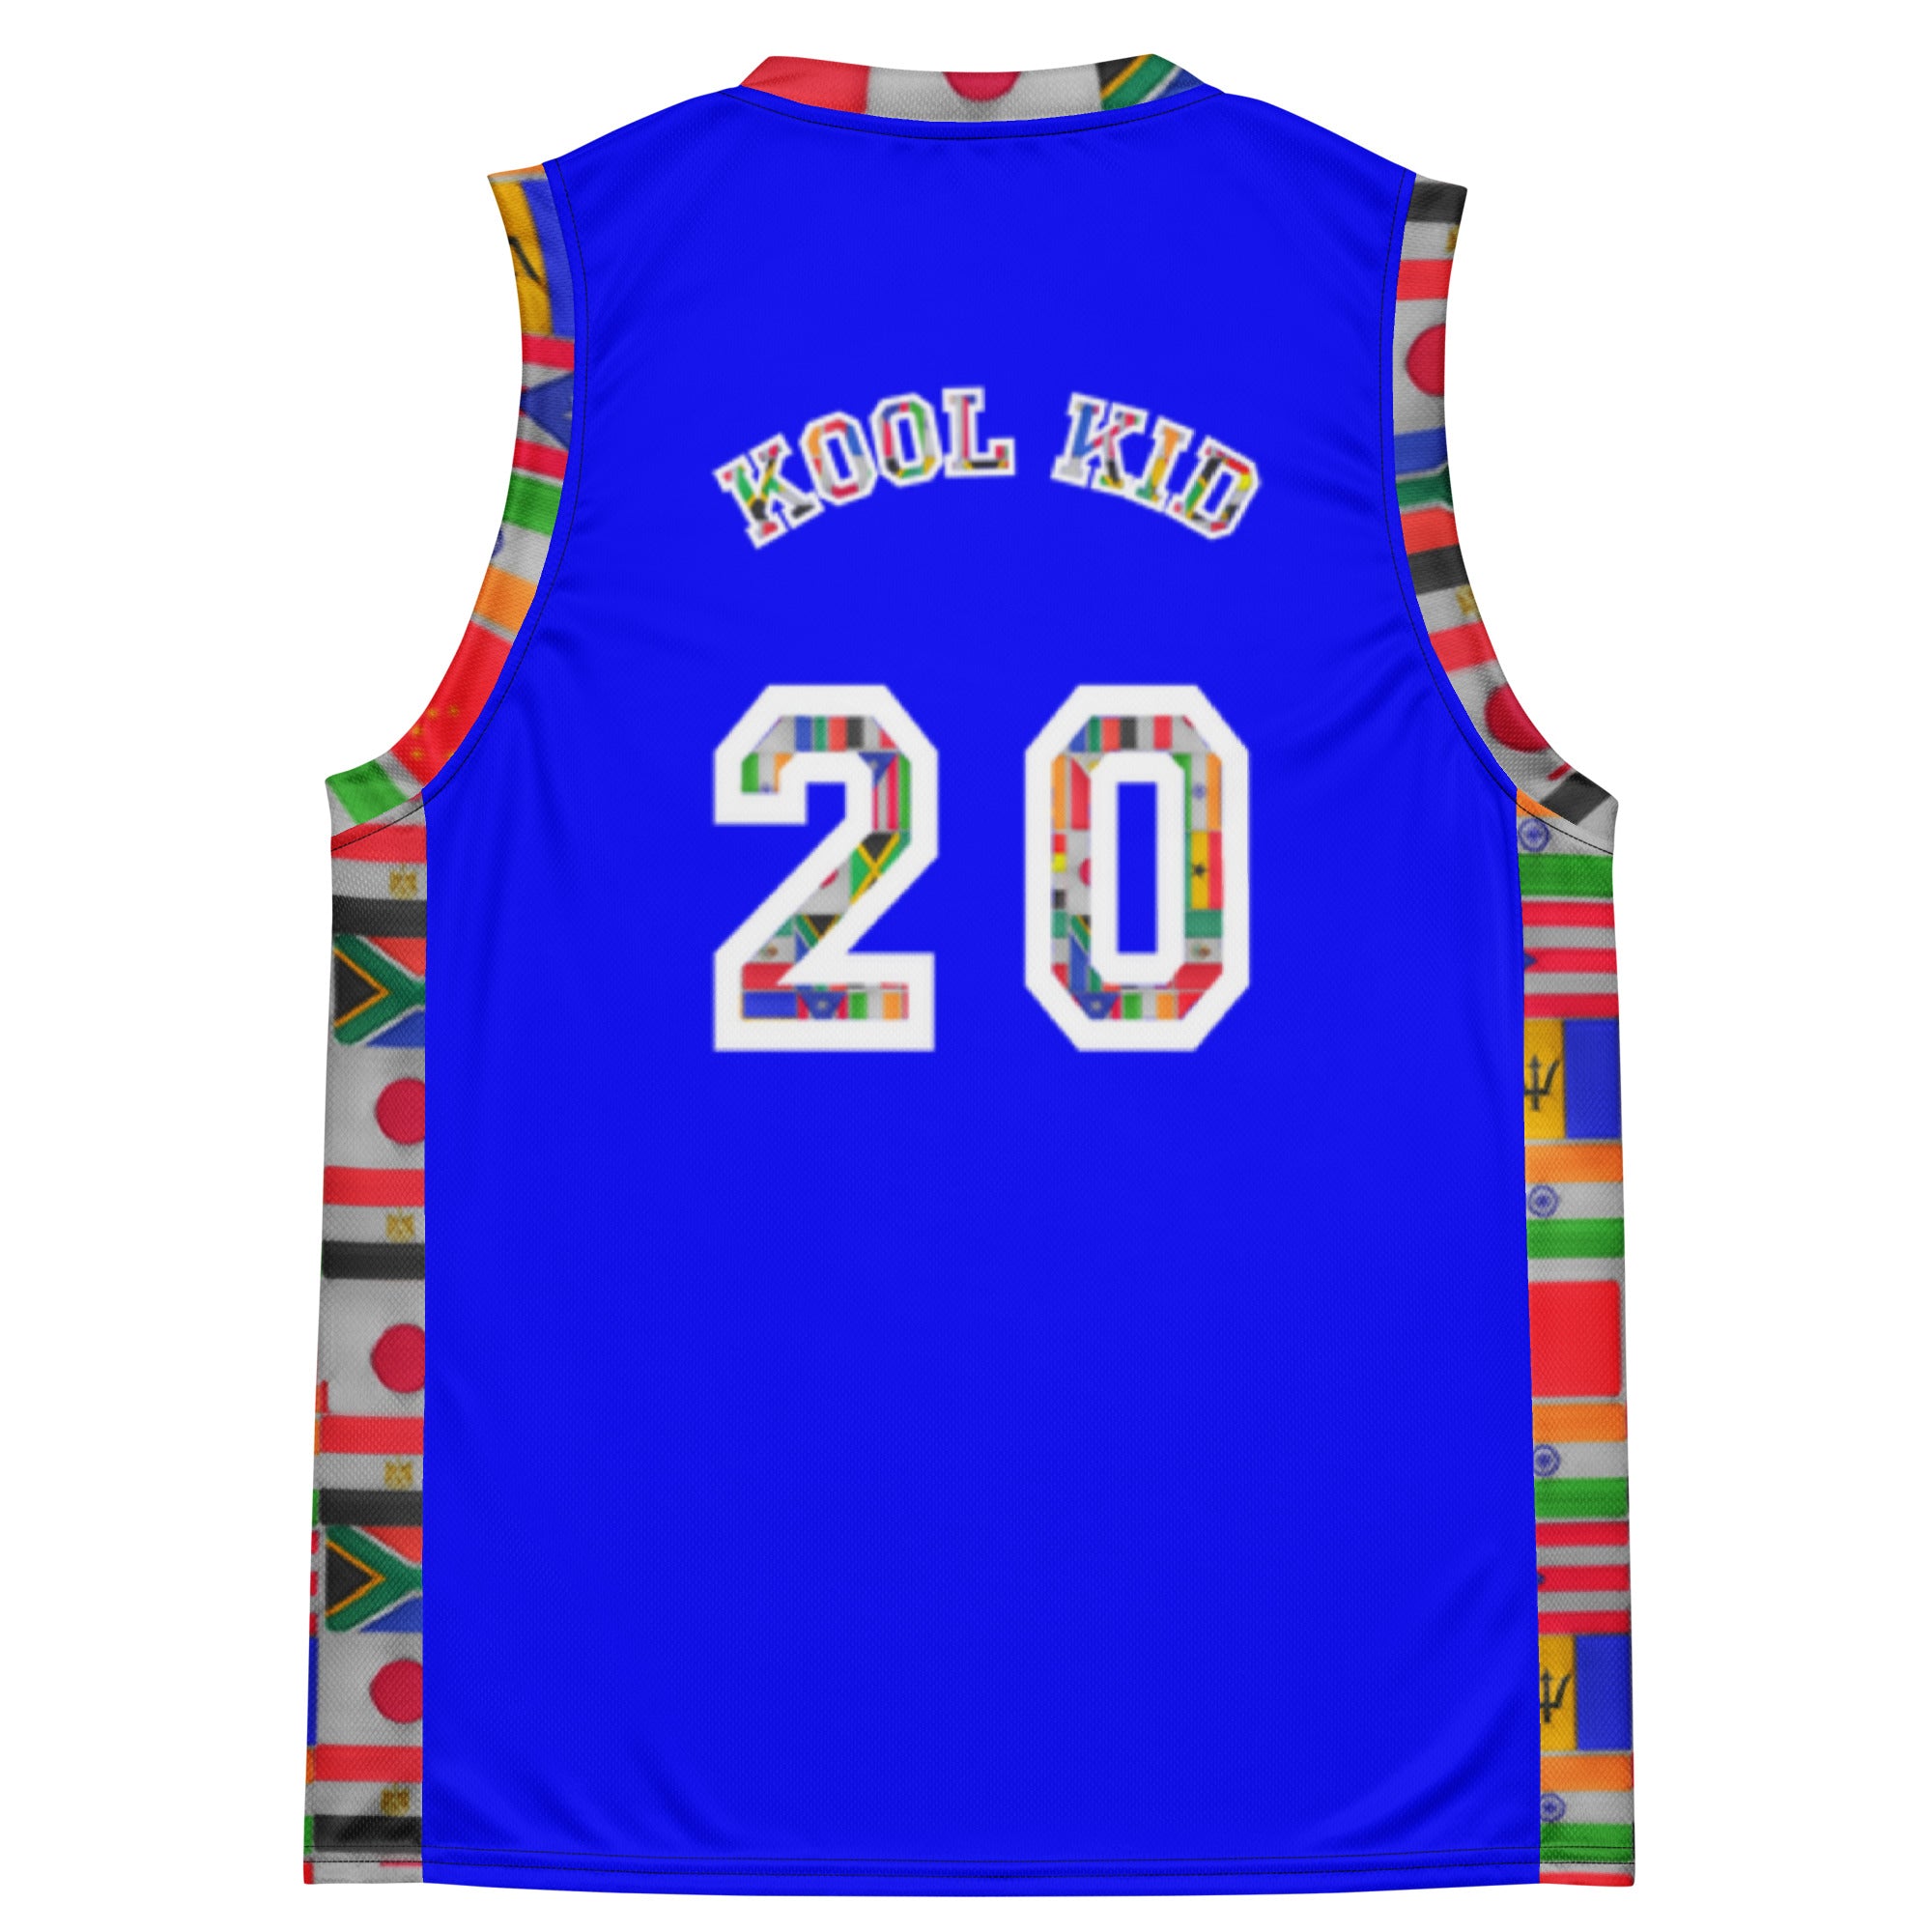 Kool Kid recycled basketball jersey